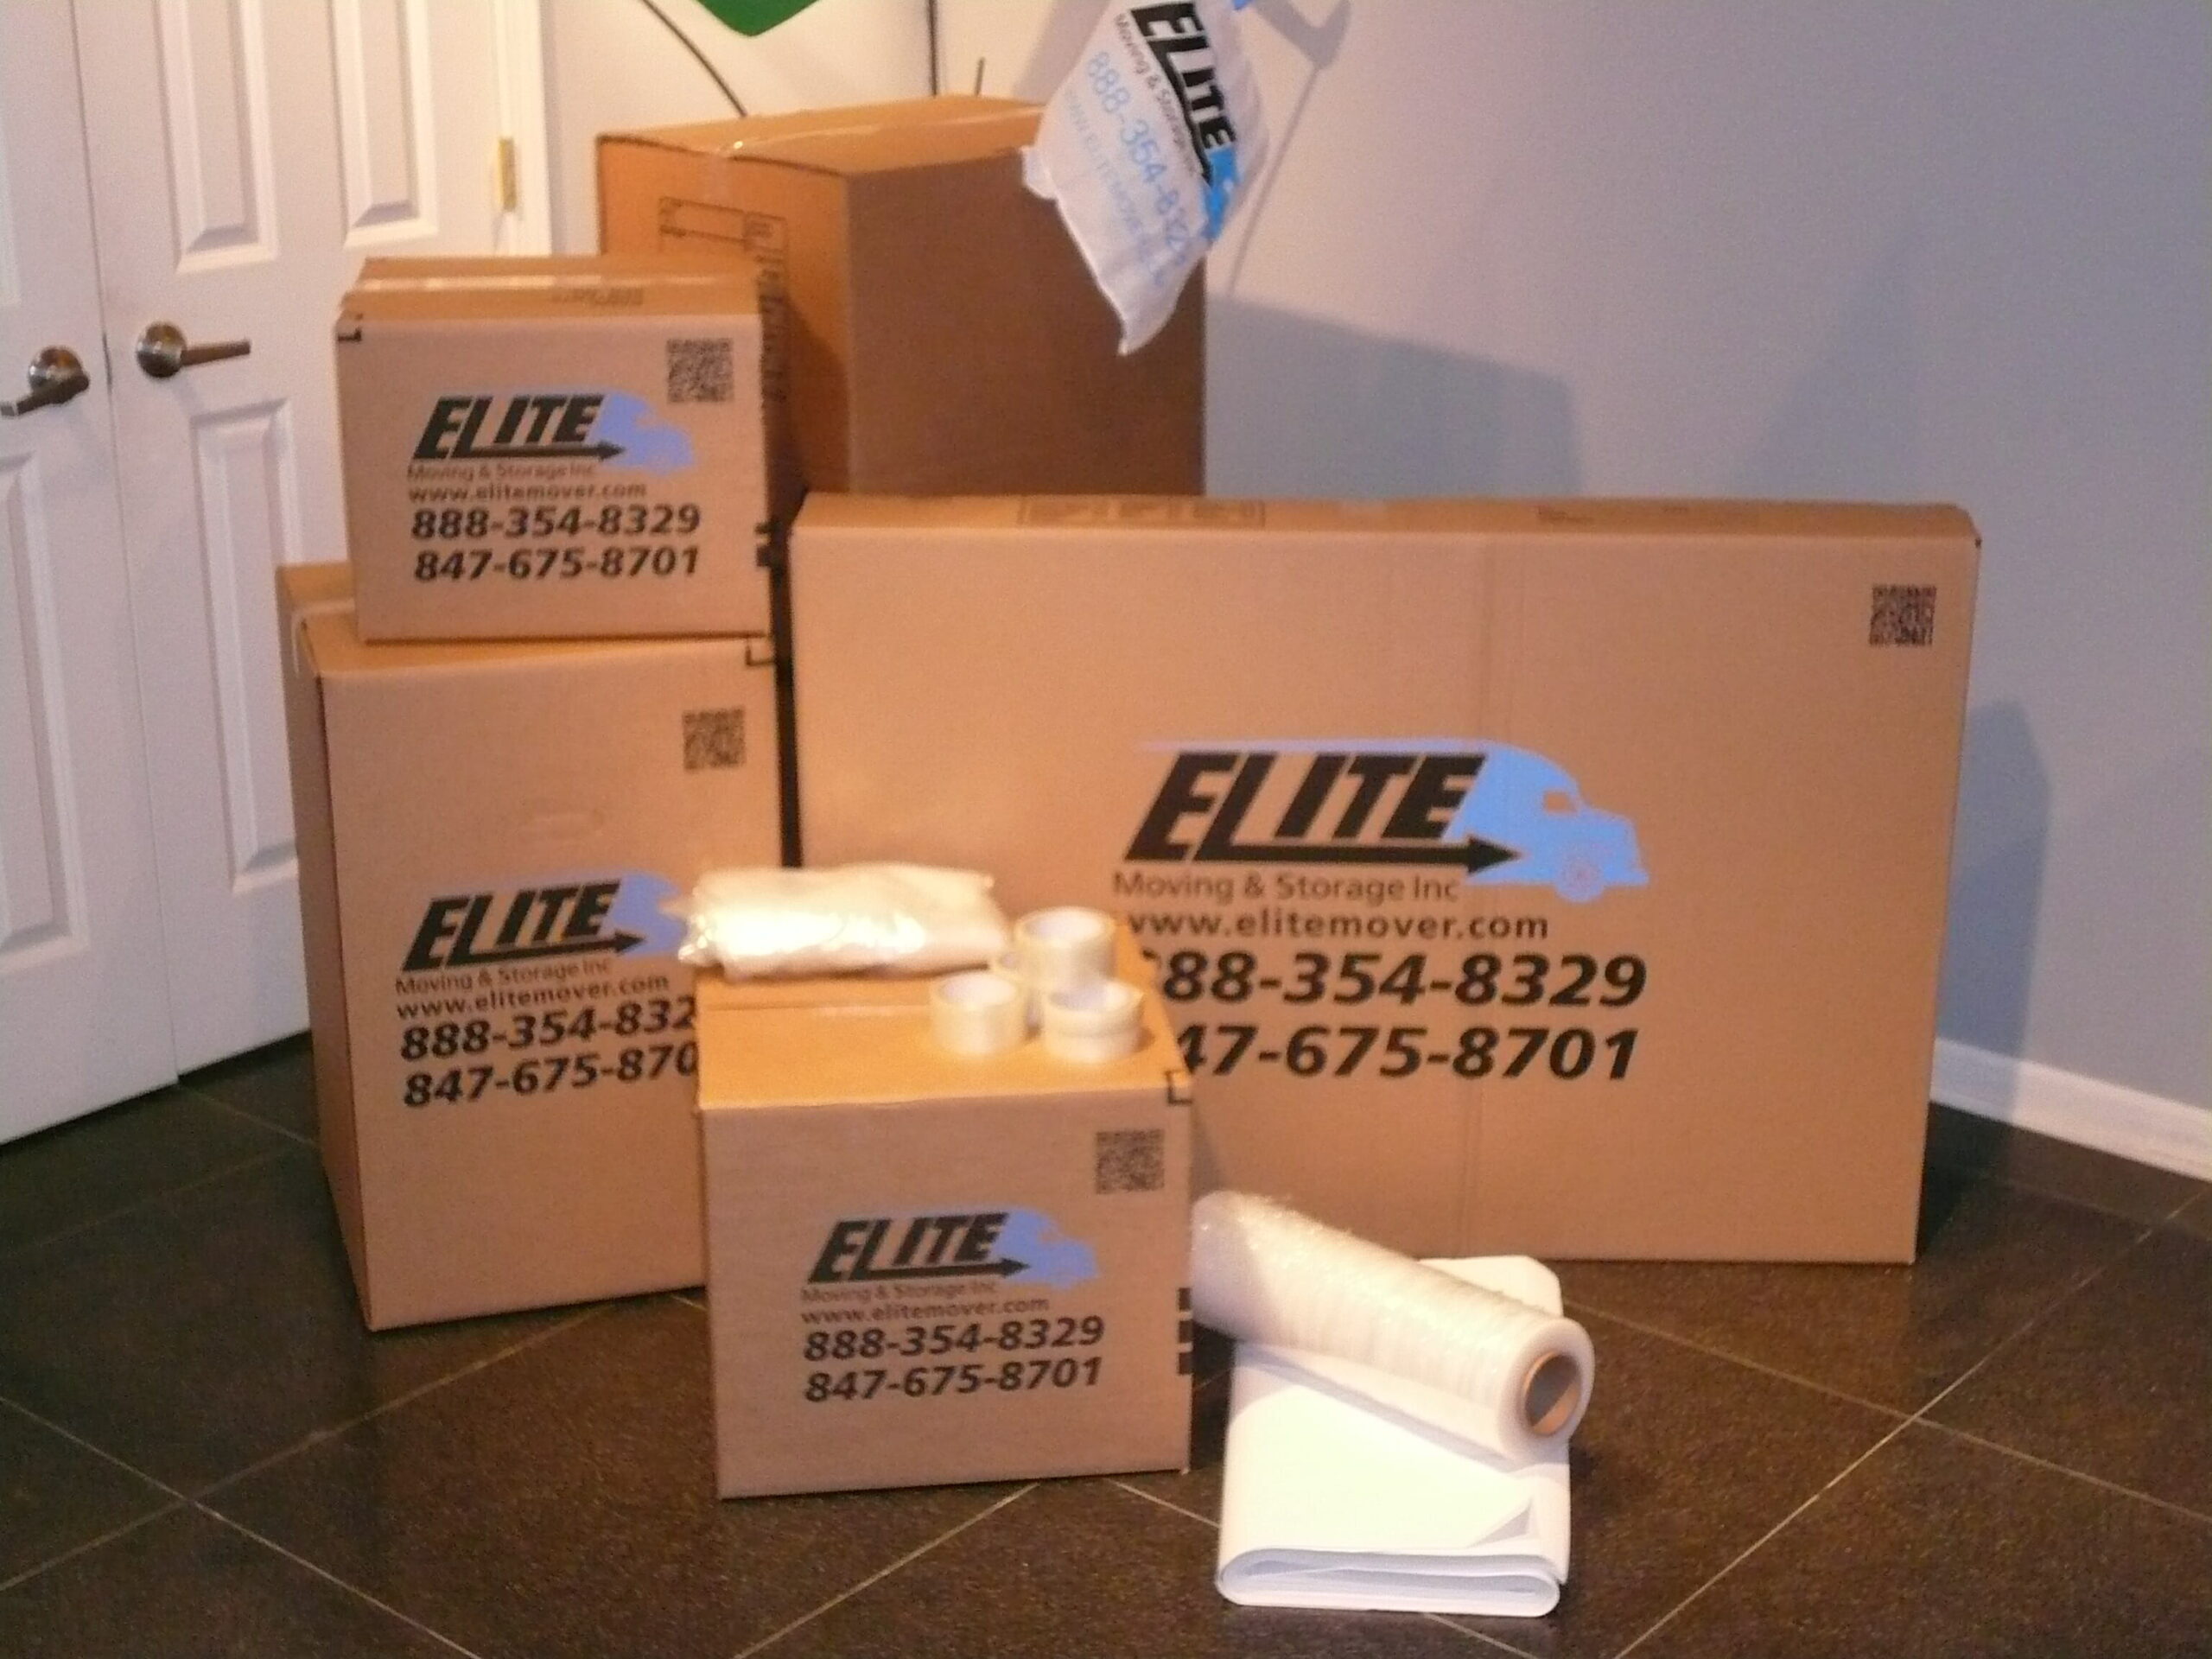 Moving boxes various sizes, packing supplies, Elite logo